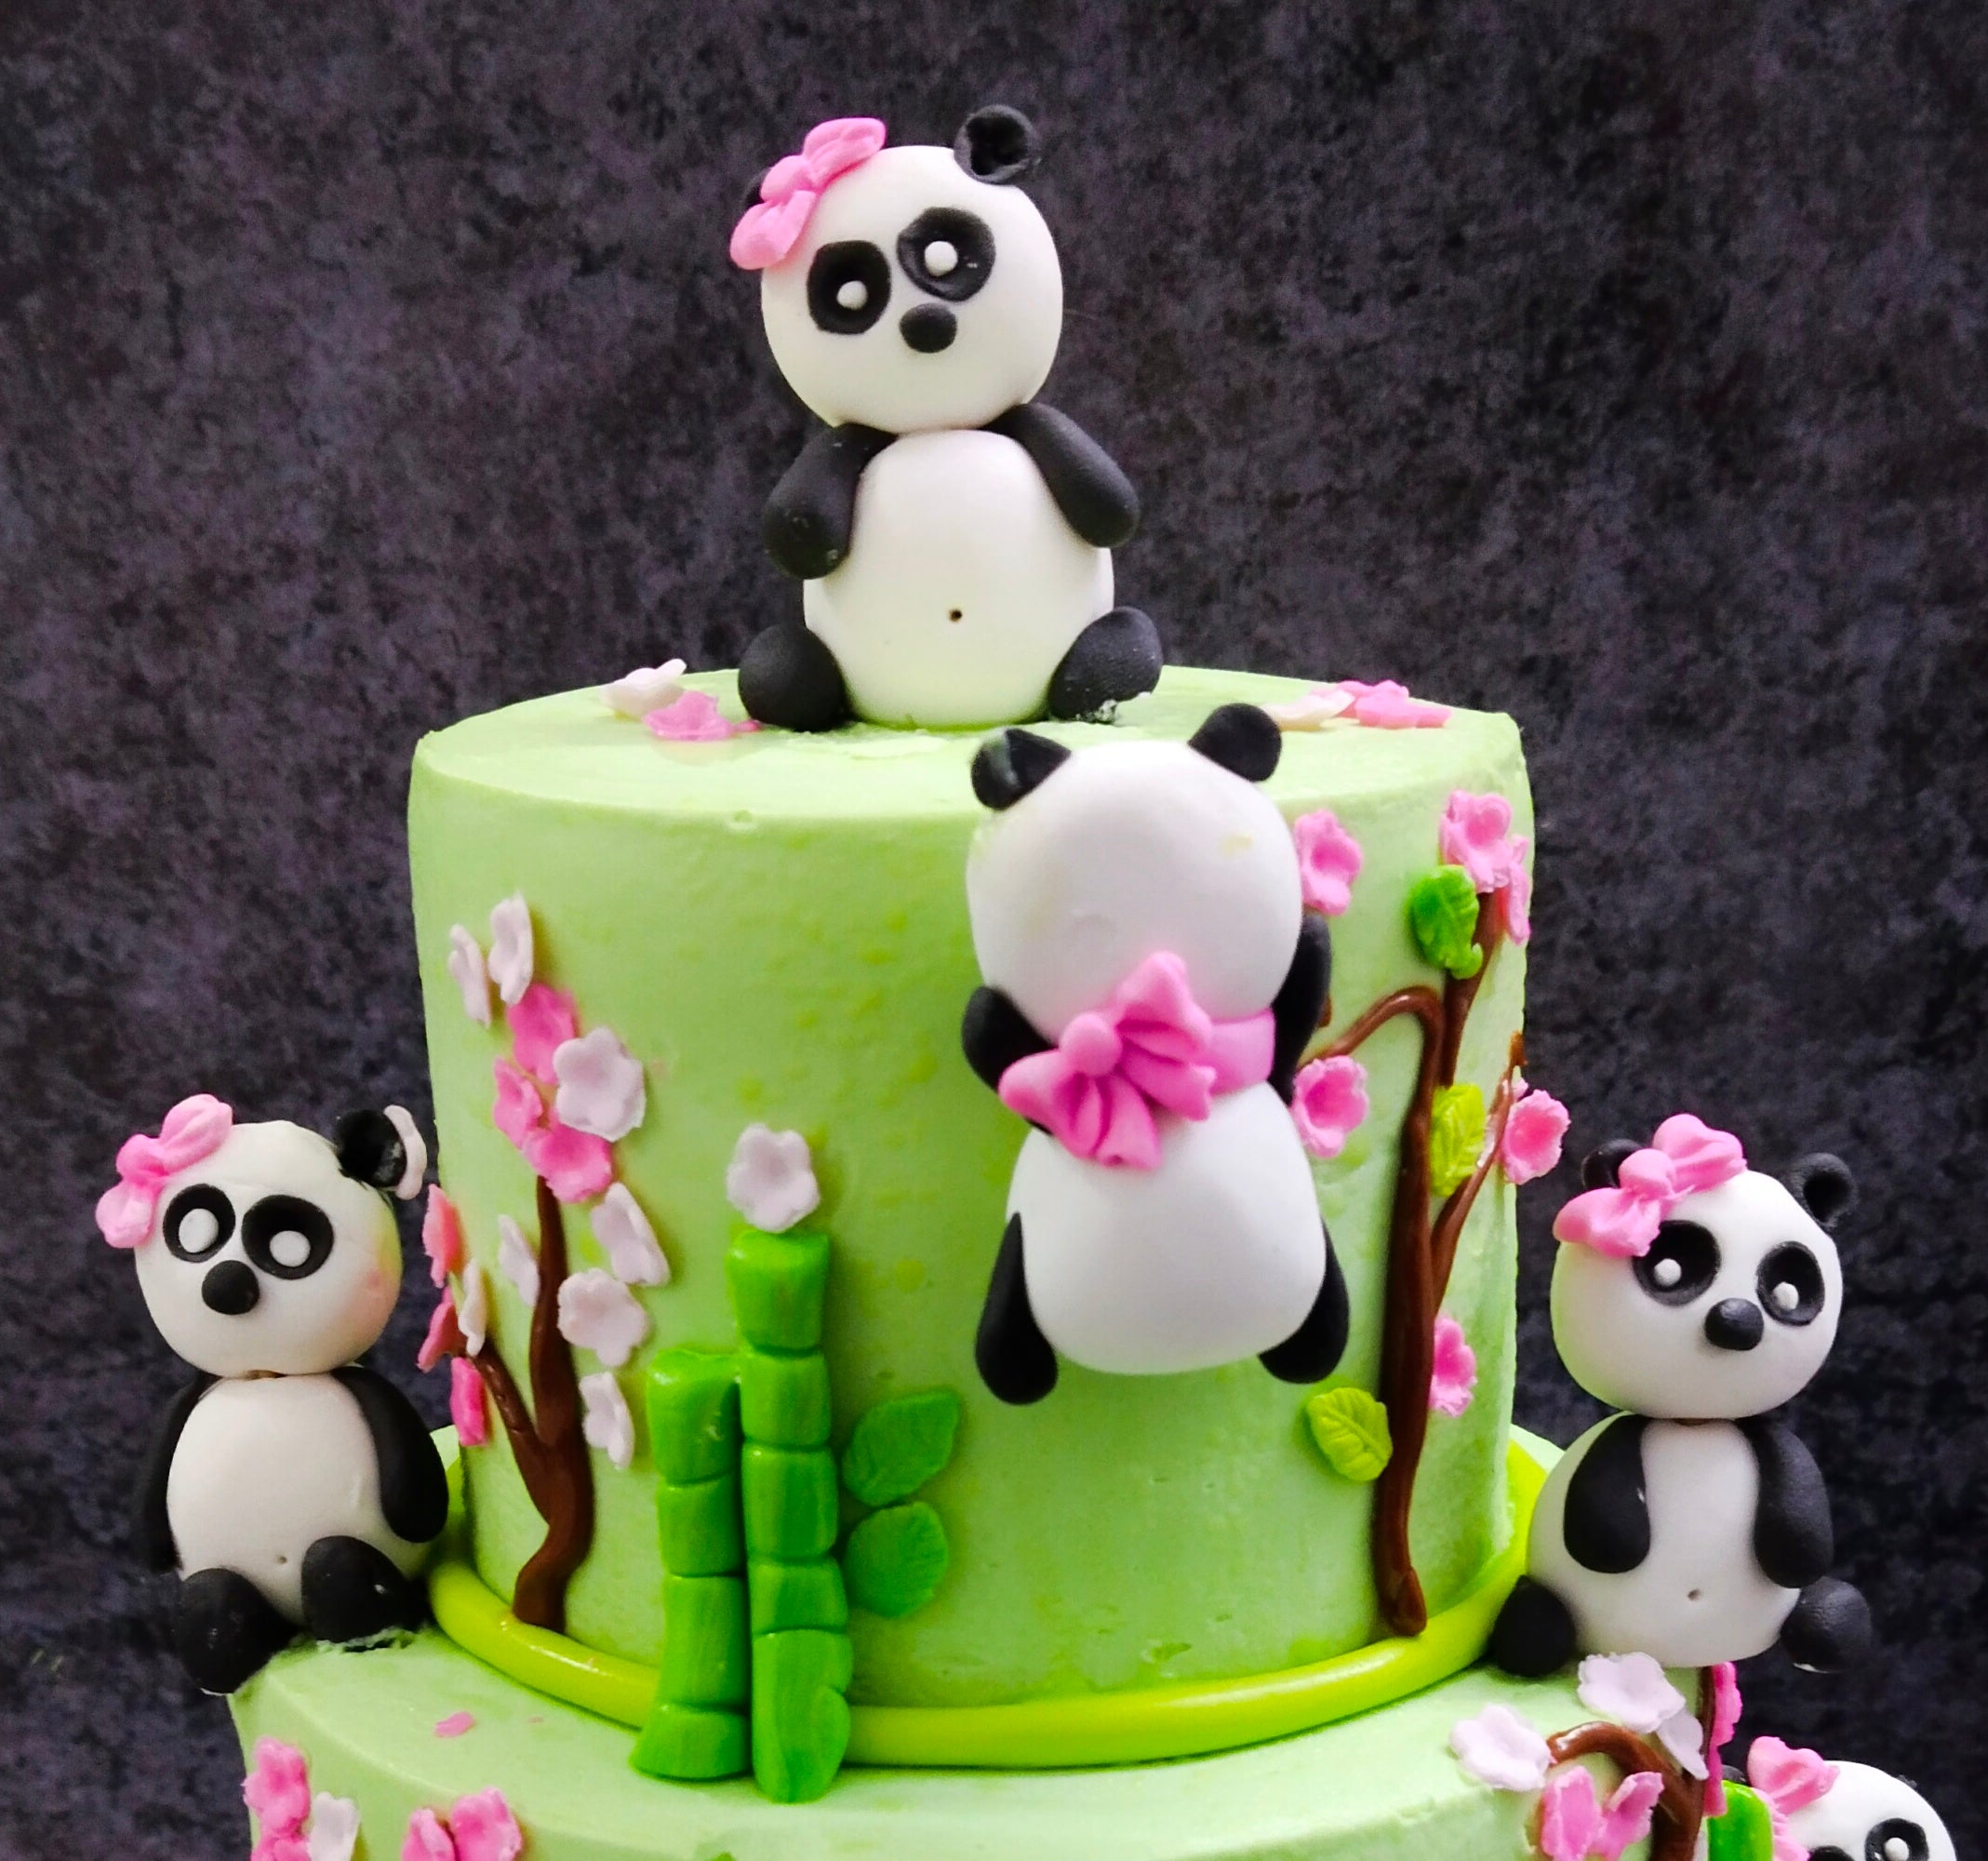 Best Panda Theme Cake In mumbai | Order Online